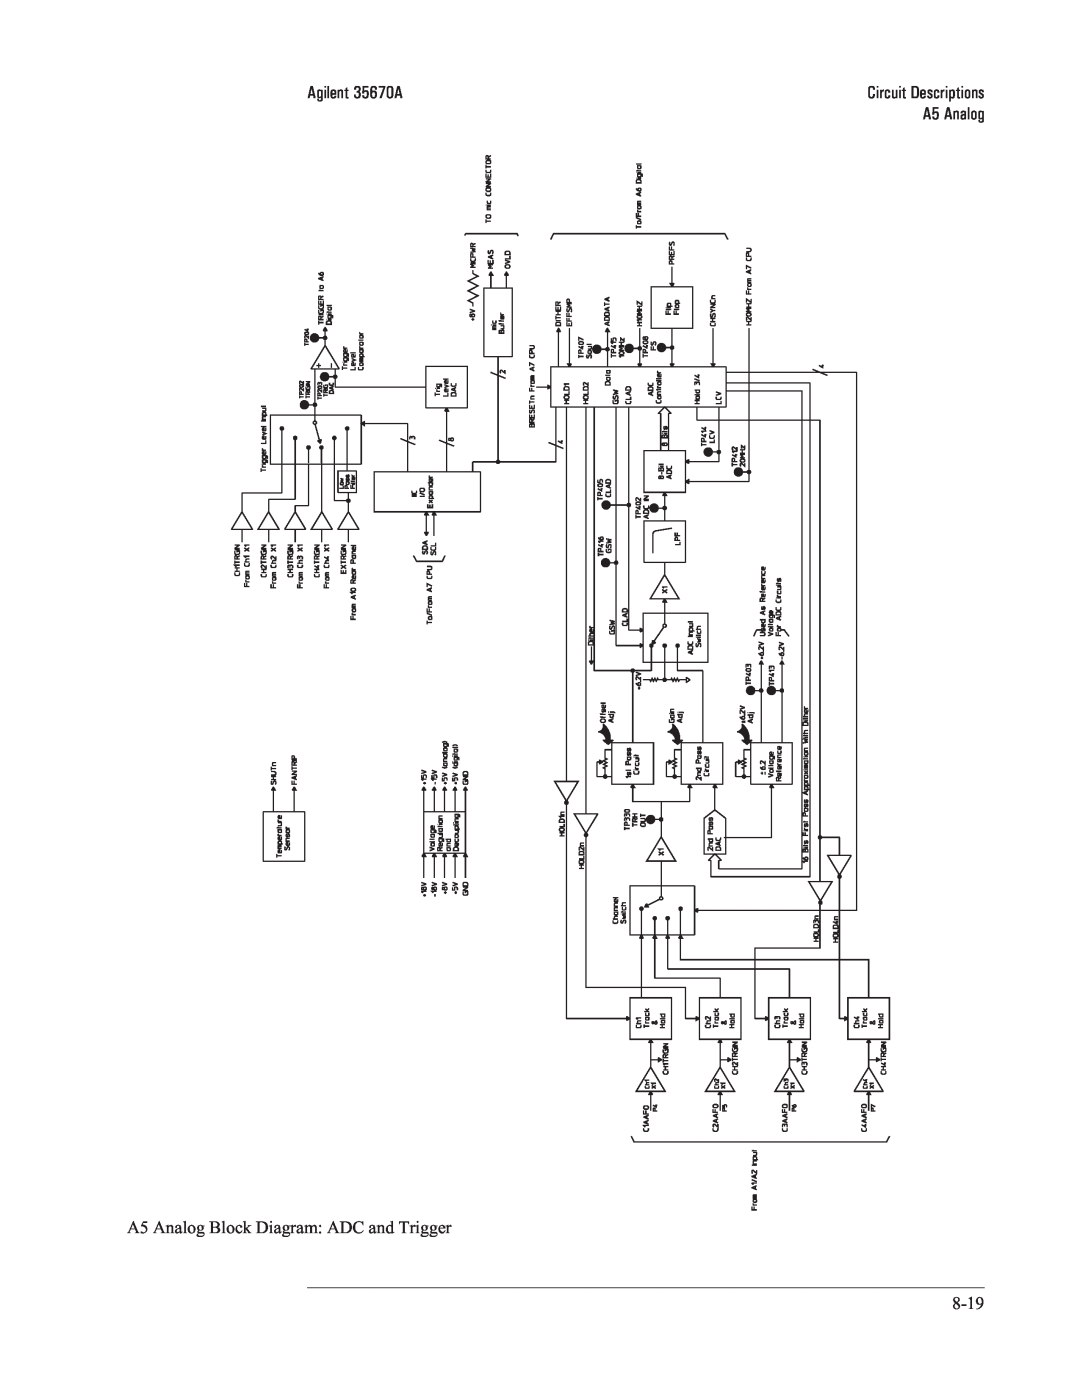 Agilent Technologies 35670-90066 manual Agilent 35670A, Circuit Descriptions, A5 Analog Block Diagram: ADC and Trigger 